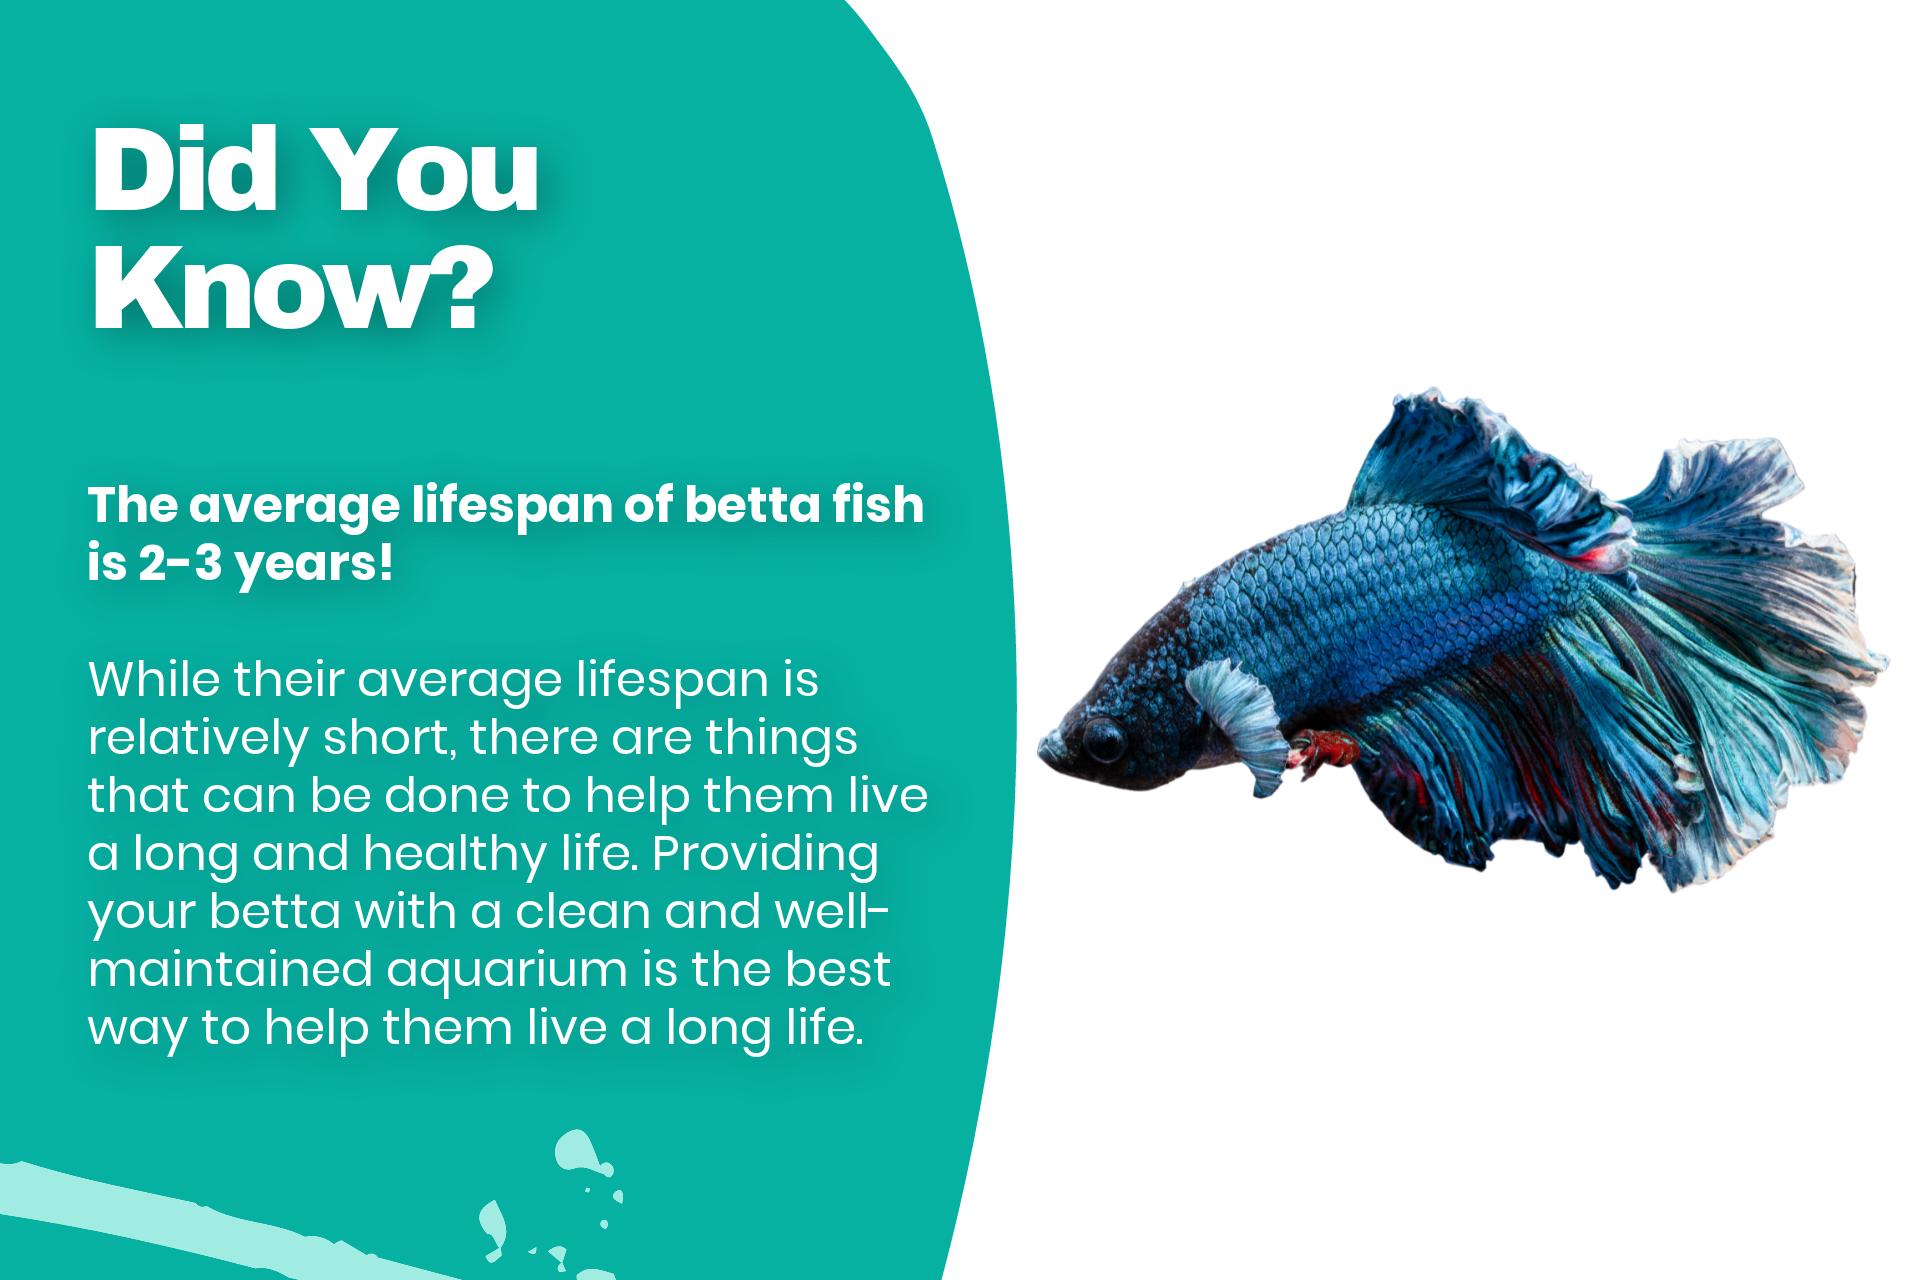 The average lifespan of betta fish is 2-3 years